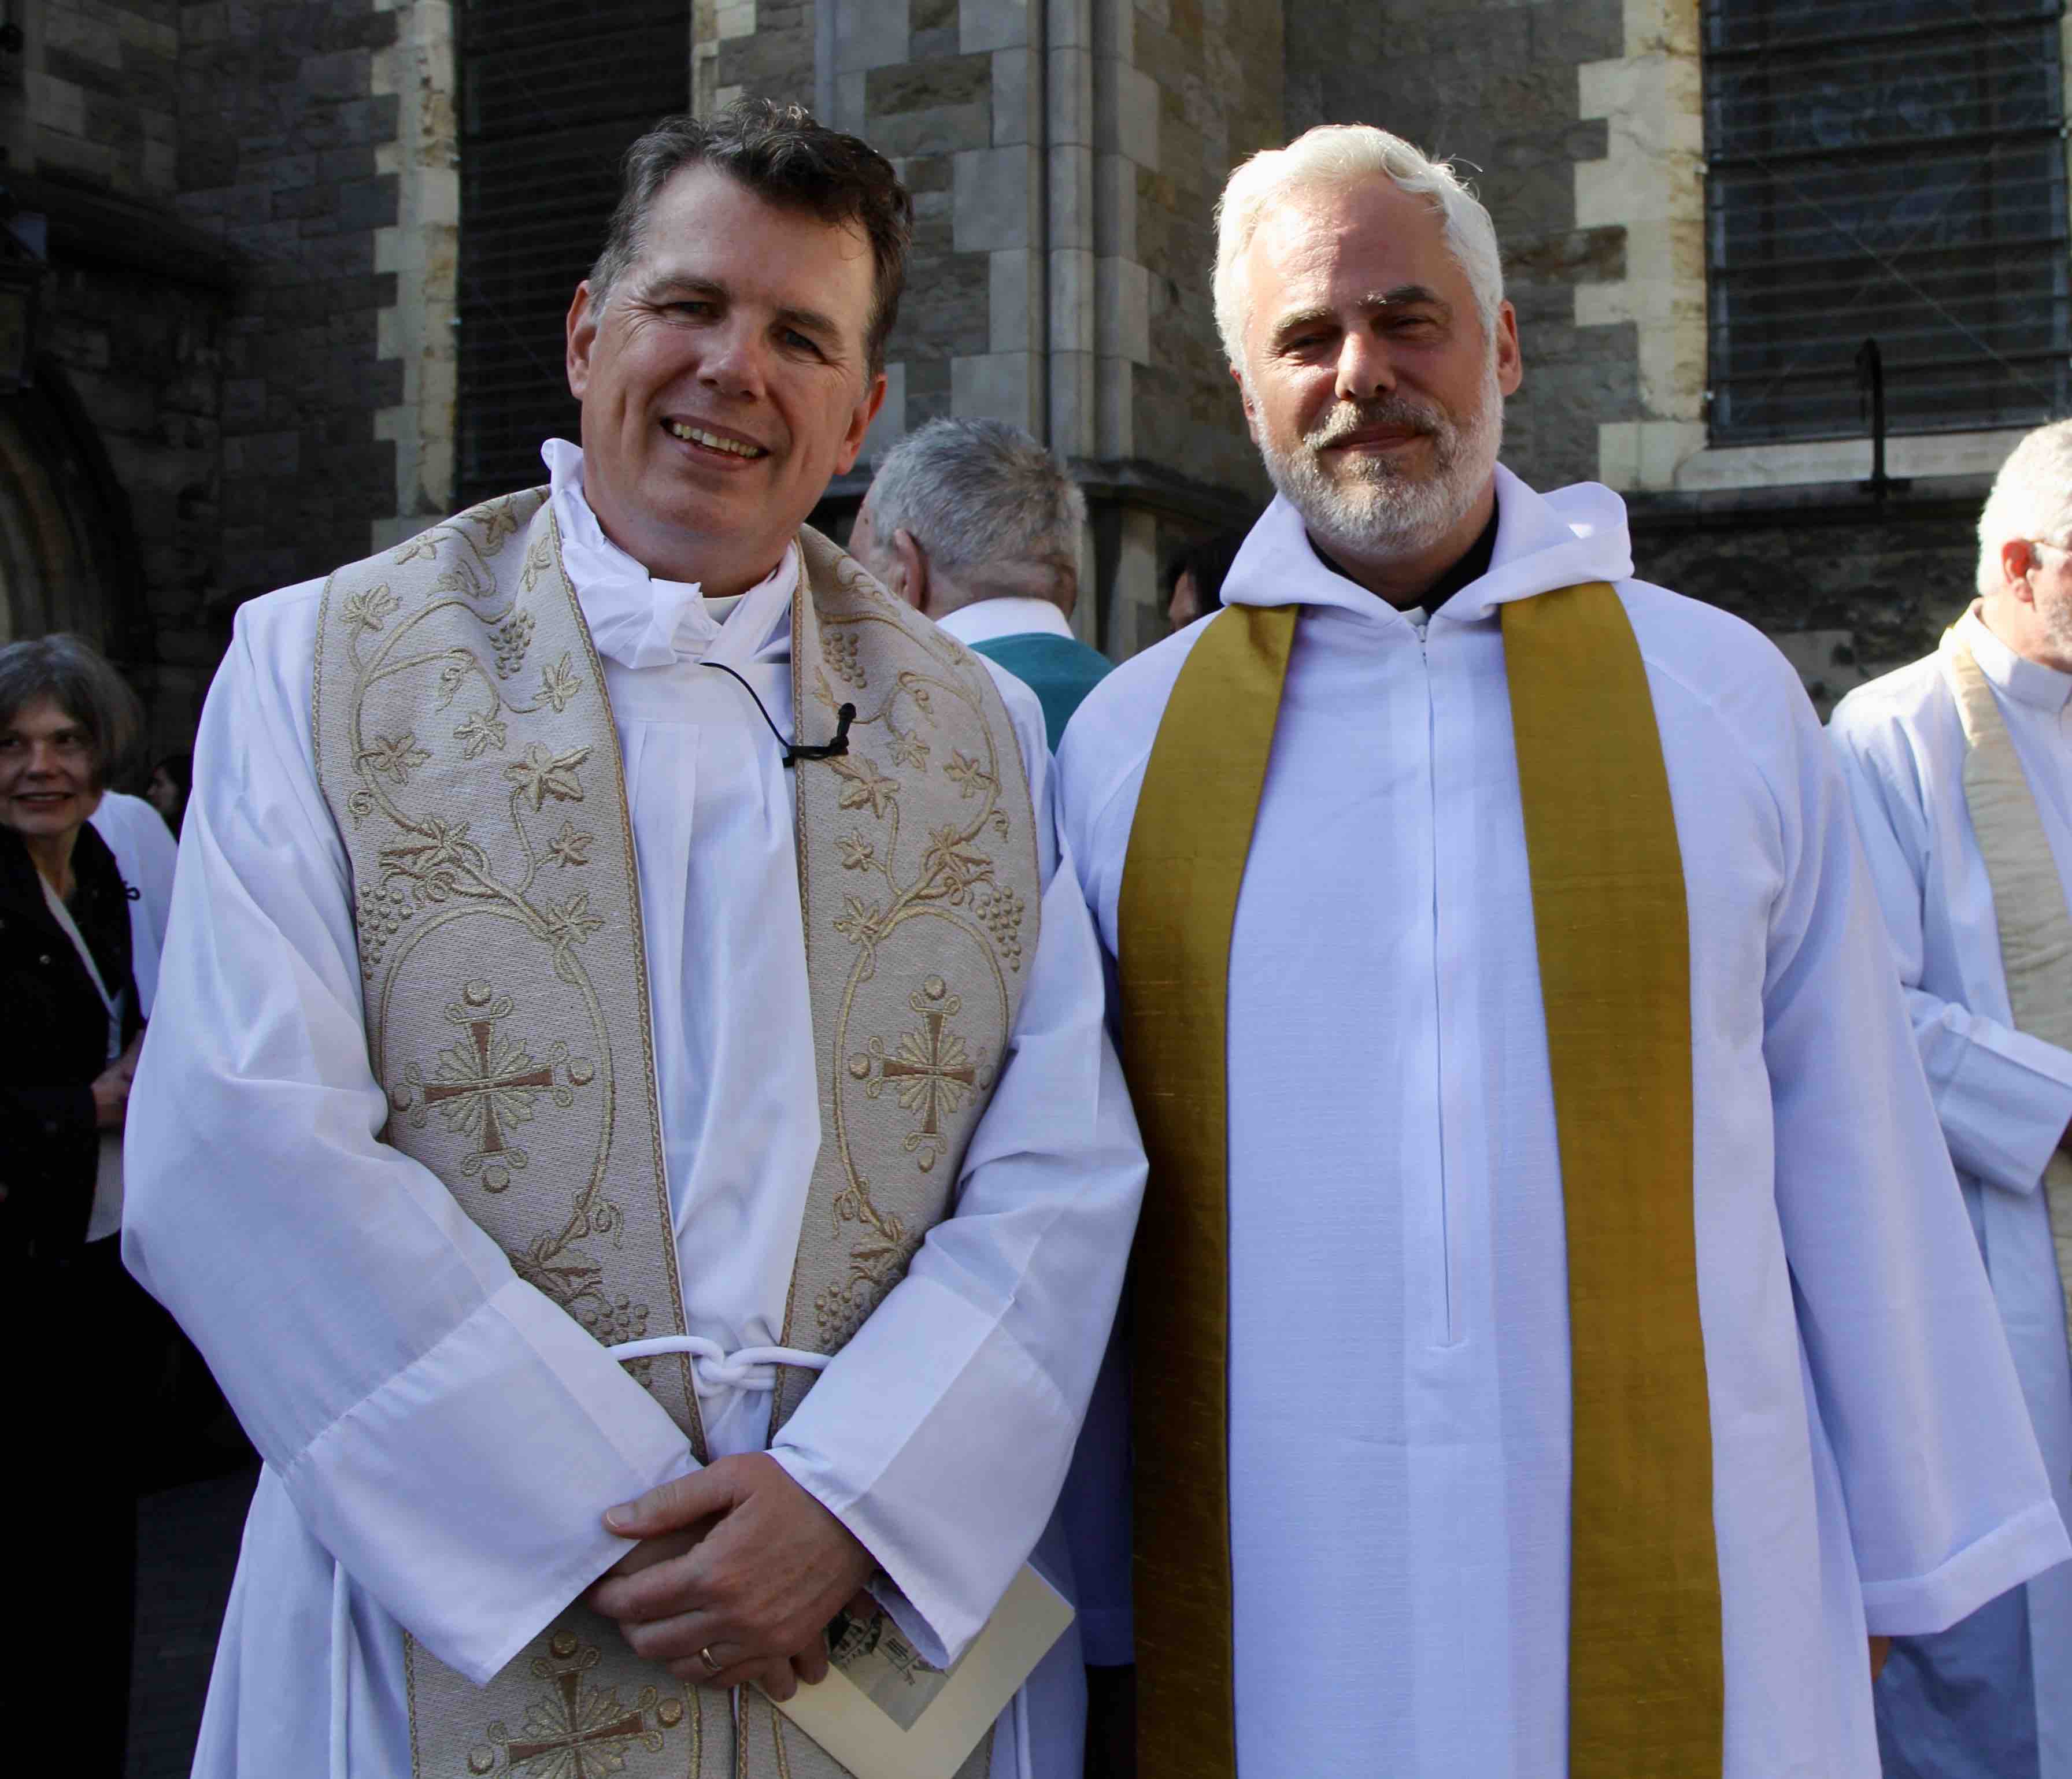 The Revd Mathew McCauley with Canon Andrew McCroskery, Vicar of St Bartholomew's.